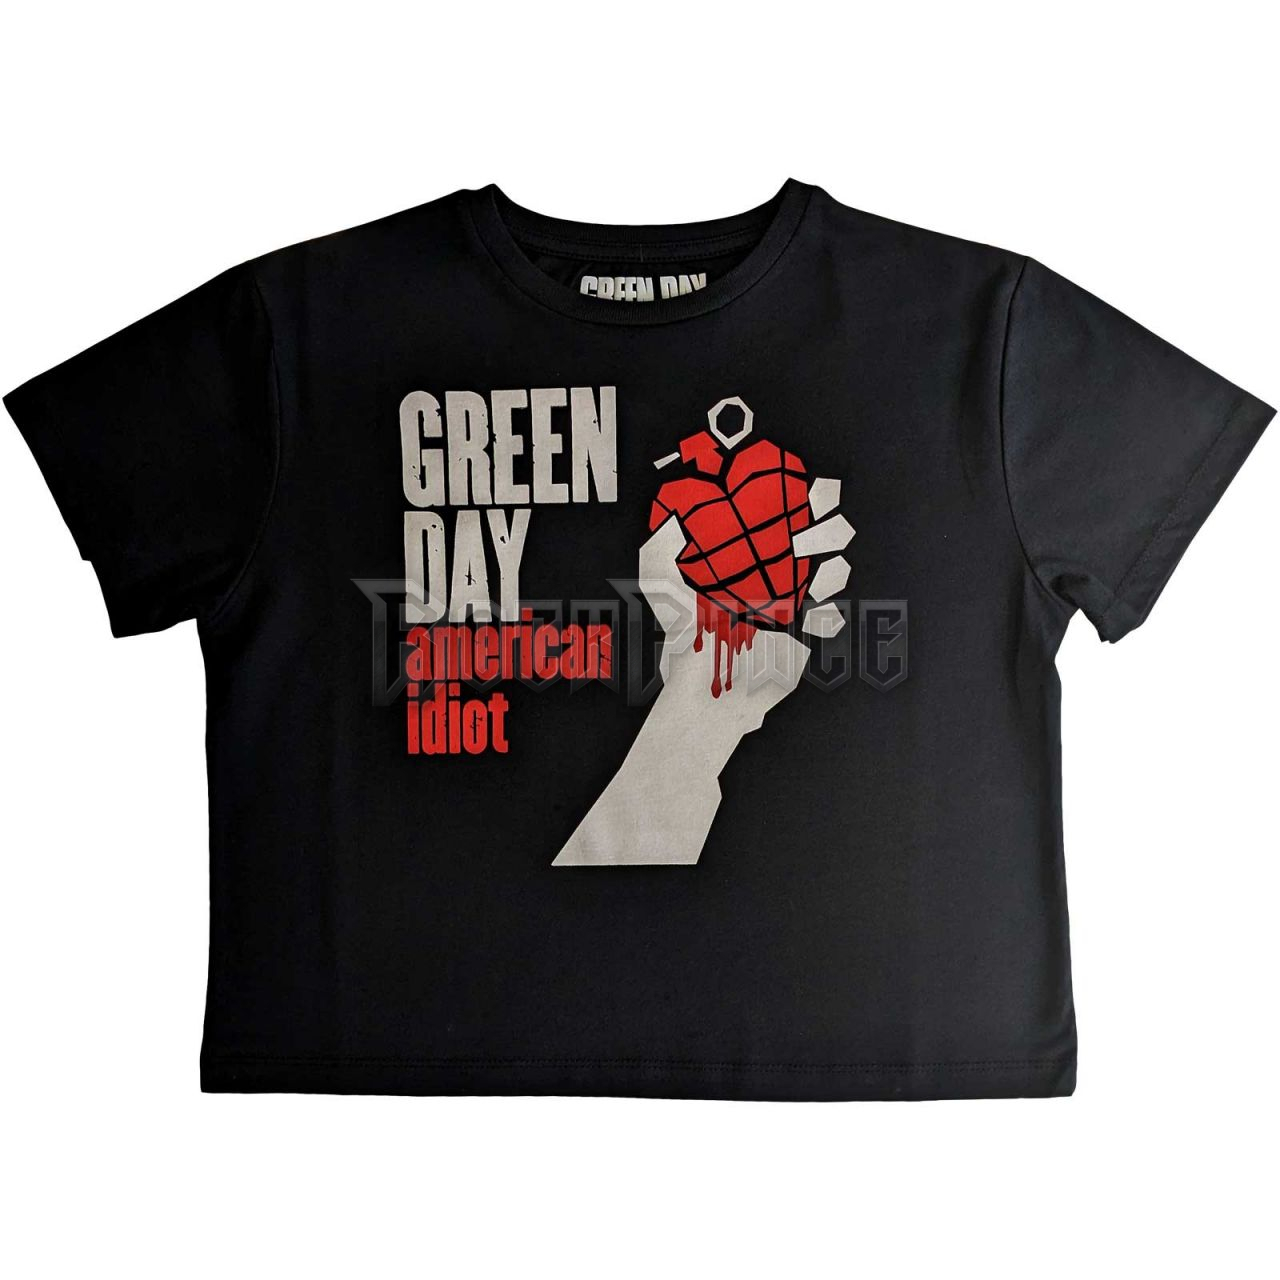 Green Day - American Idiot - női crop top - GDCT12LB